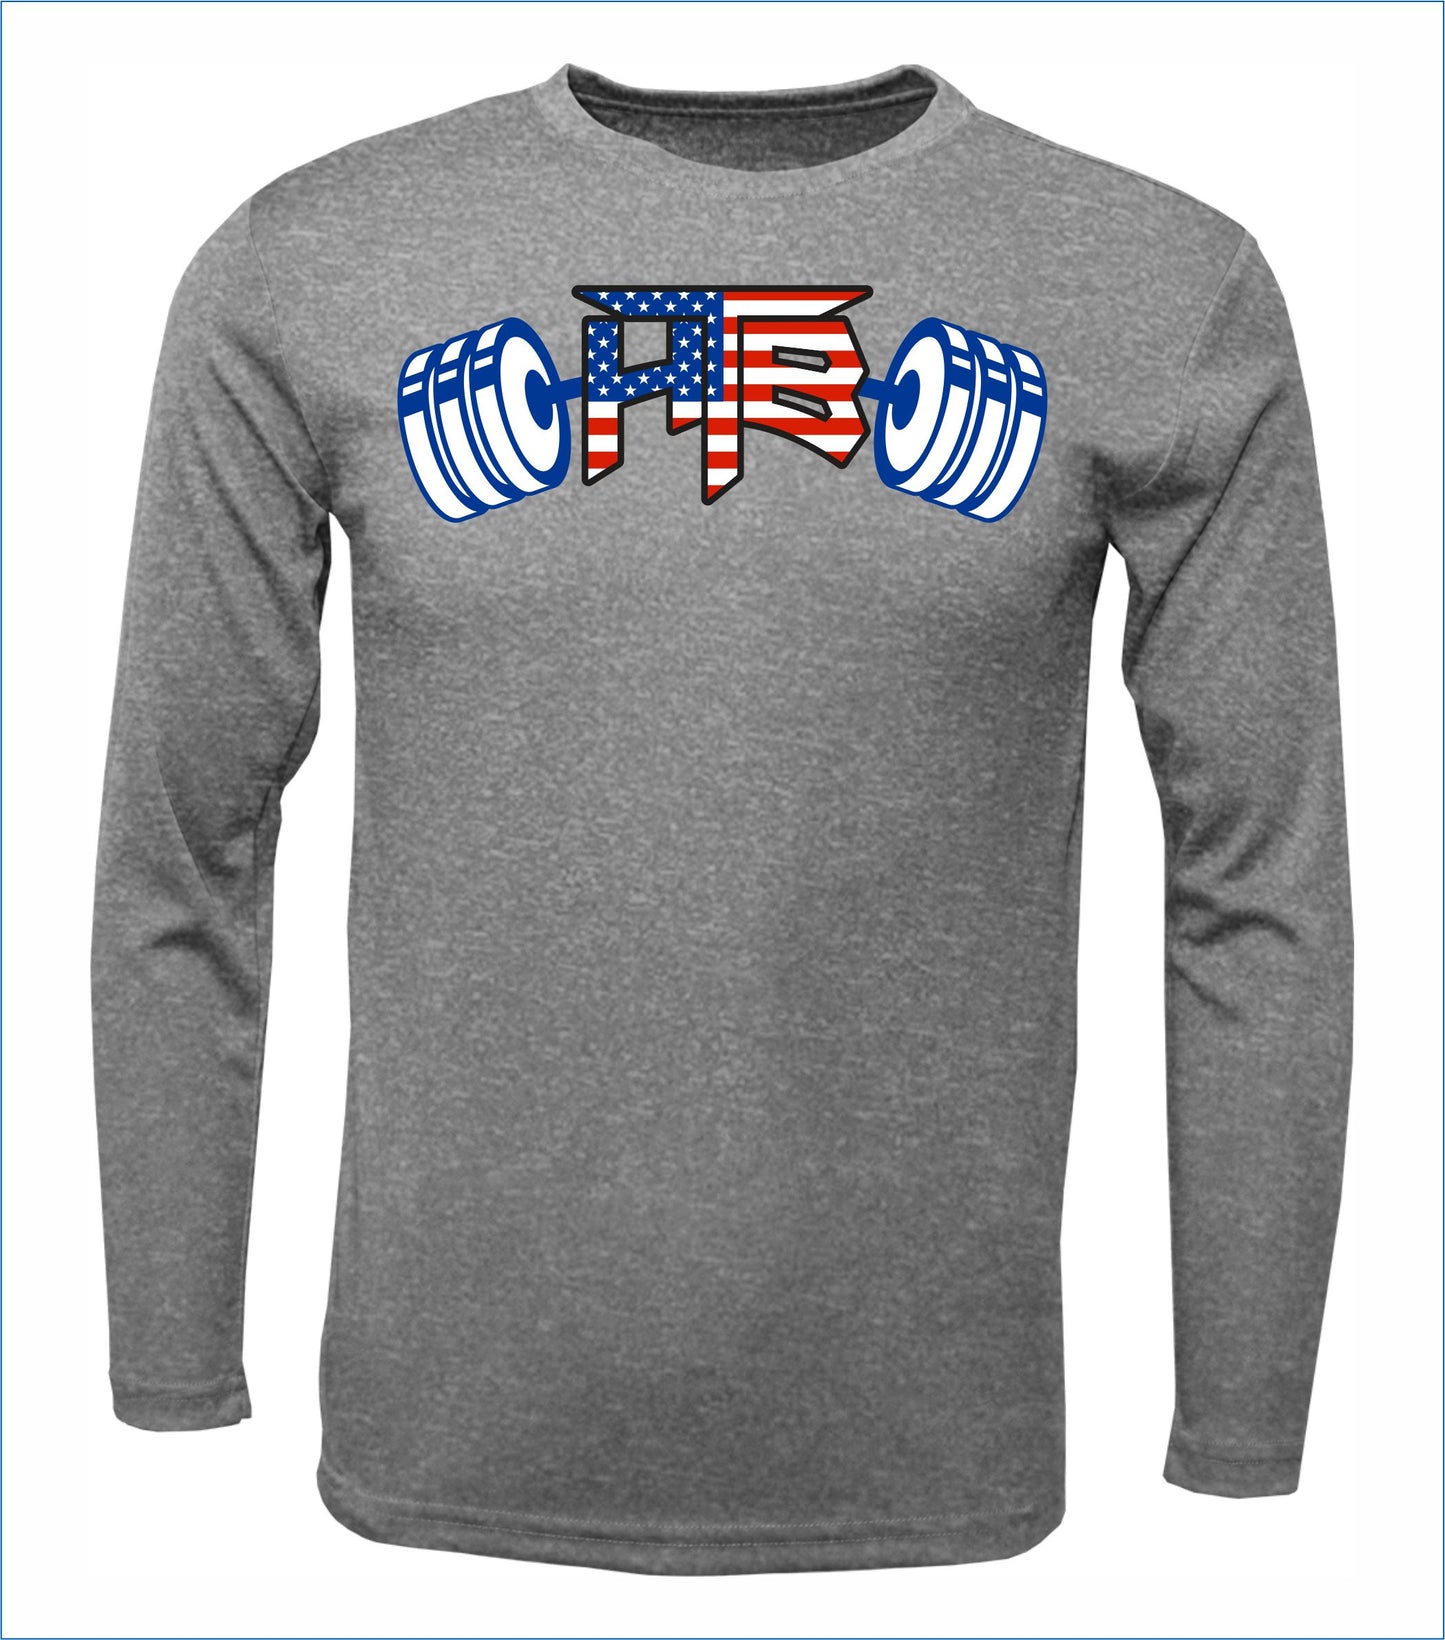 HTB USA Design Long Sleeve Cotton Shirt